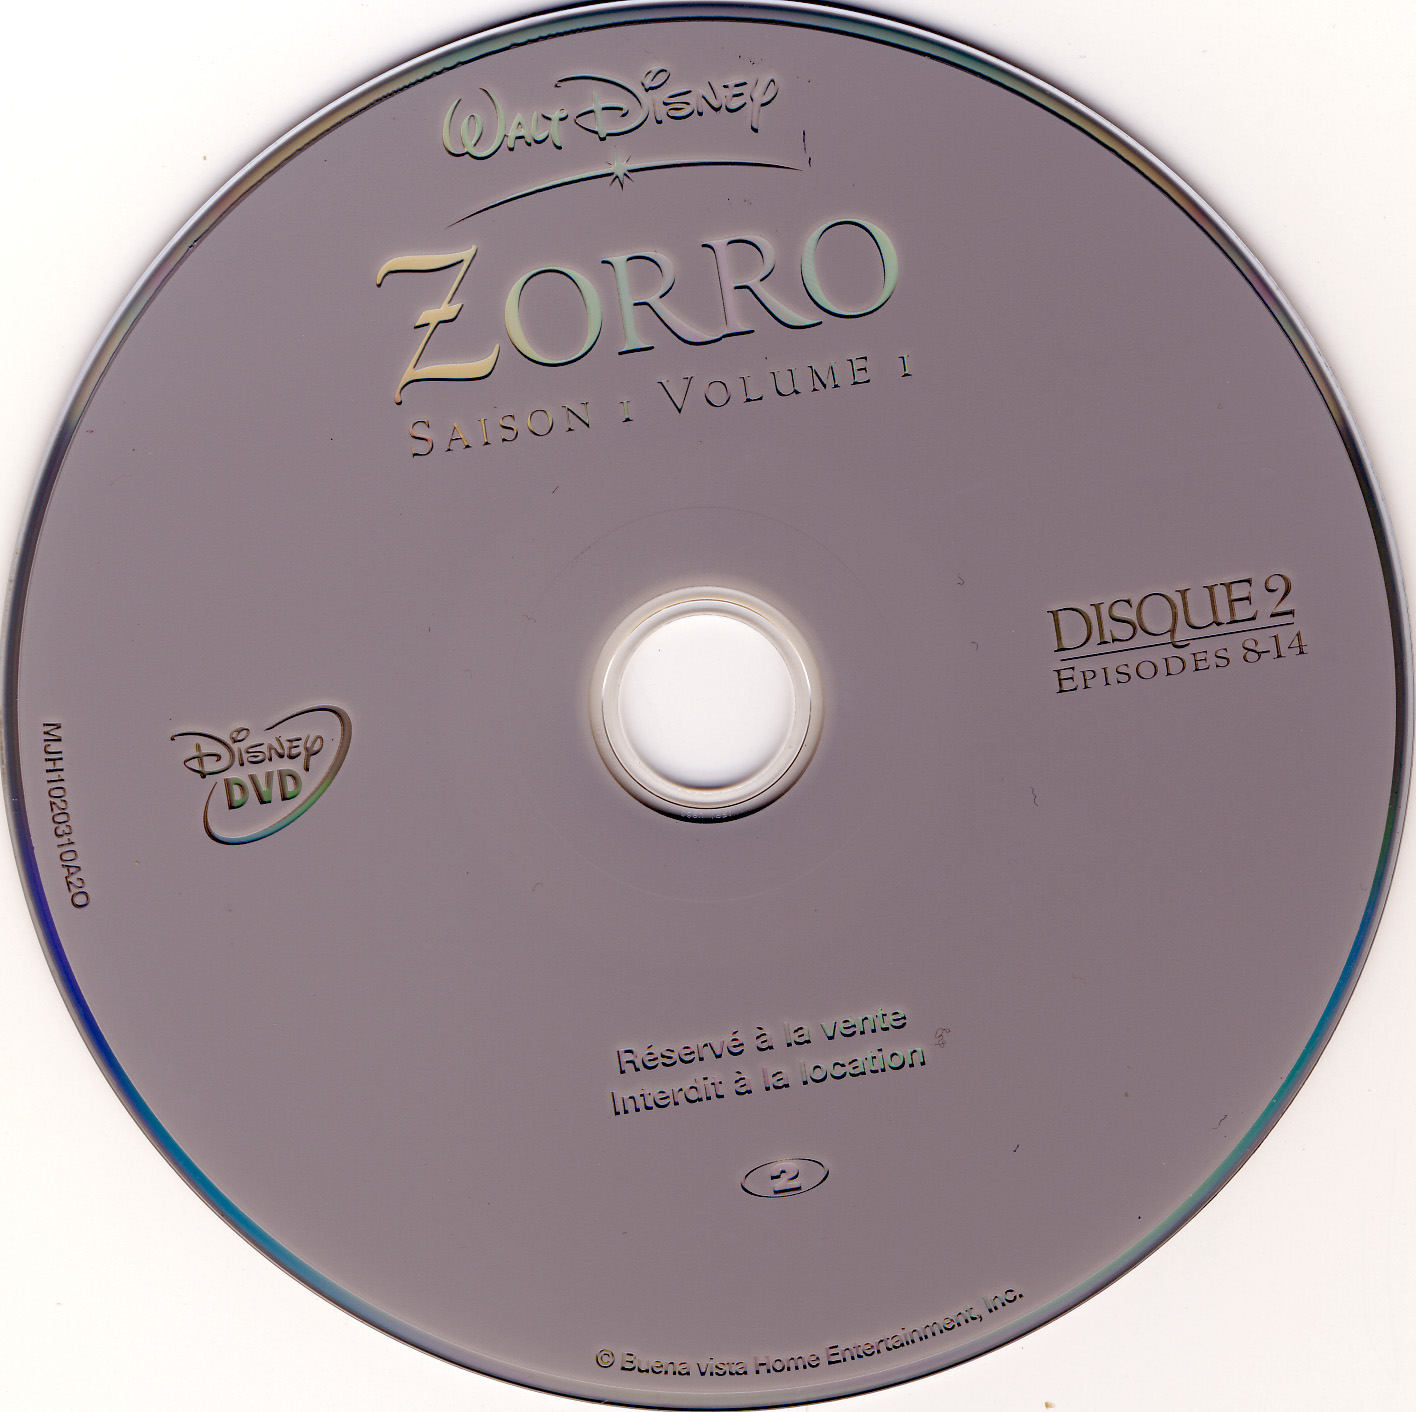 Zorro Saison 1 vol 1 DISC 2